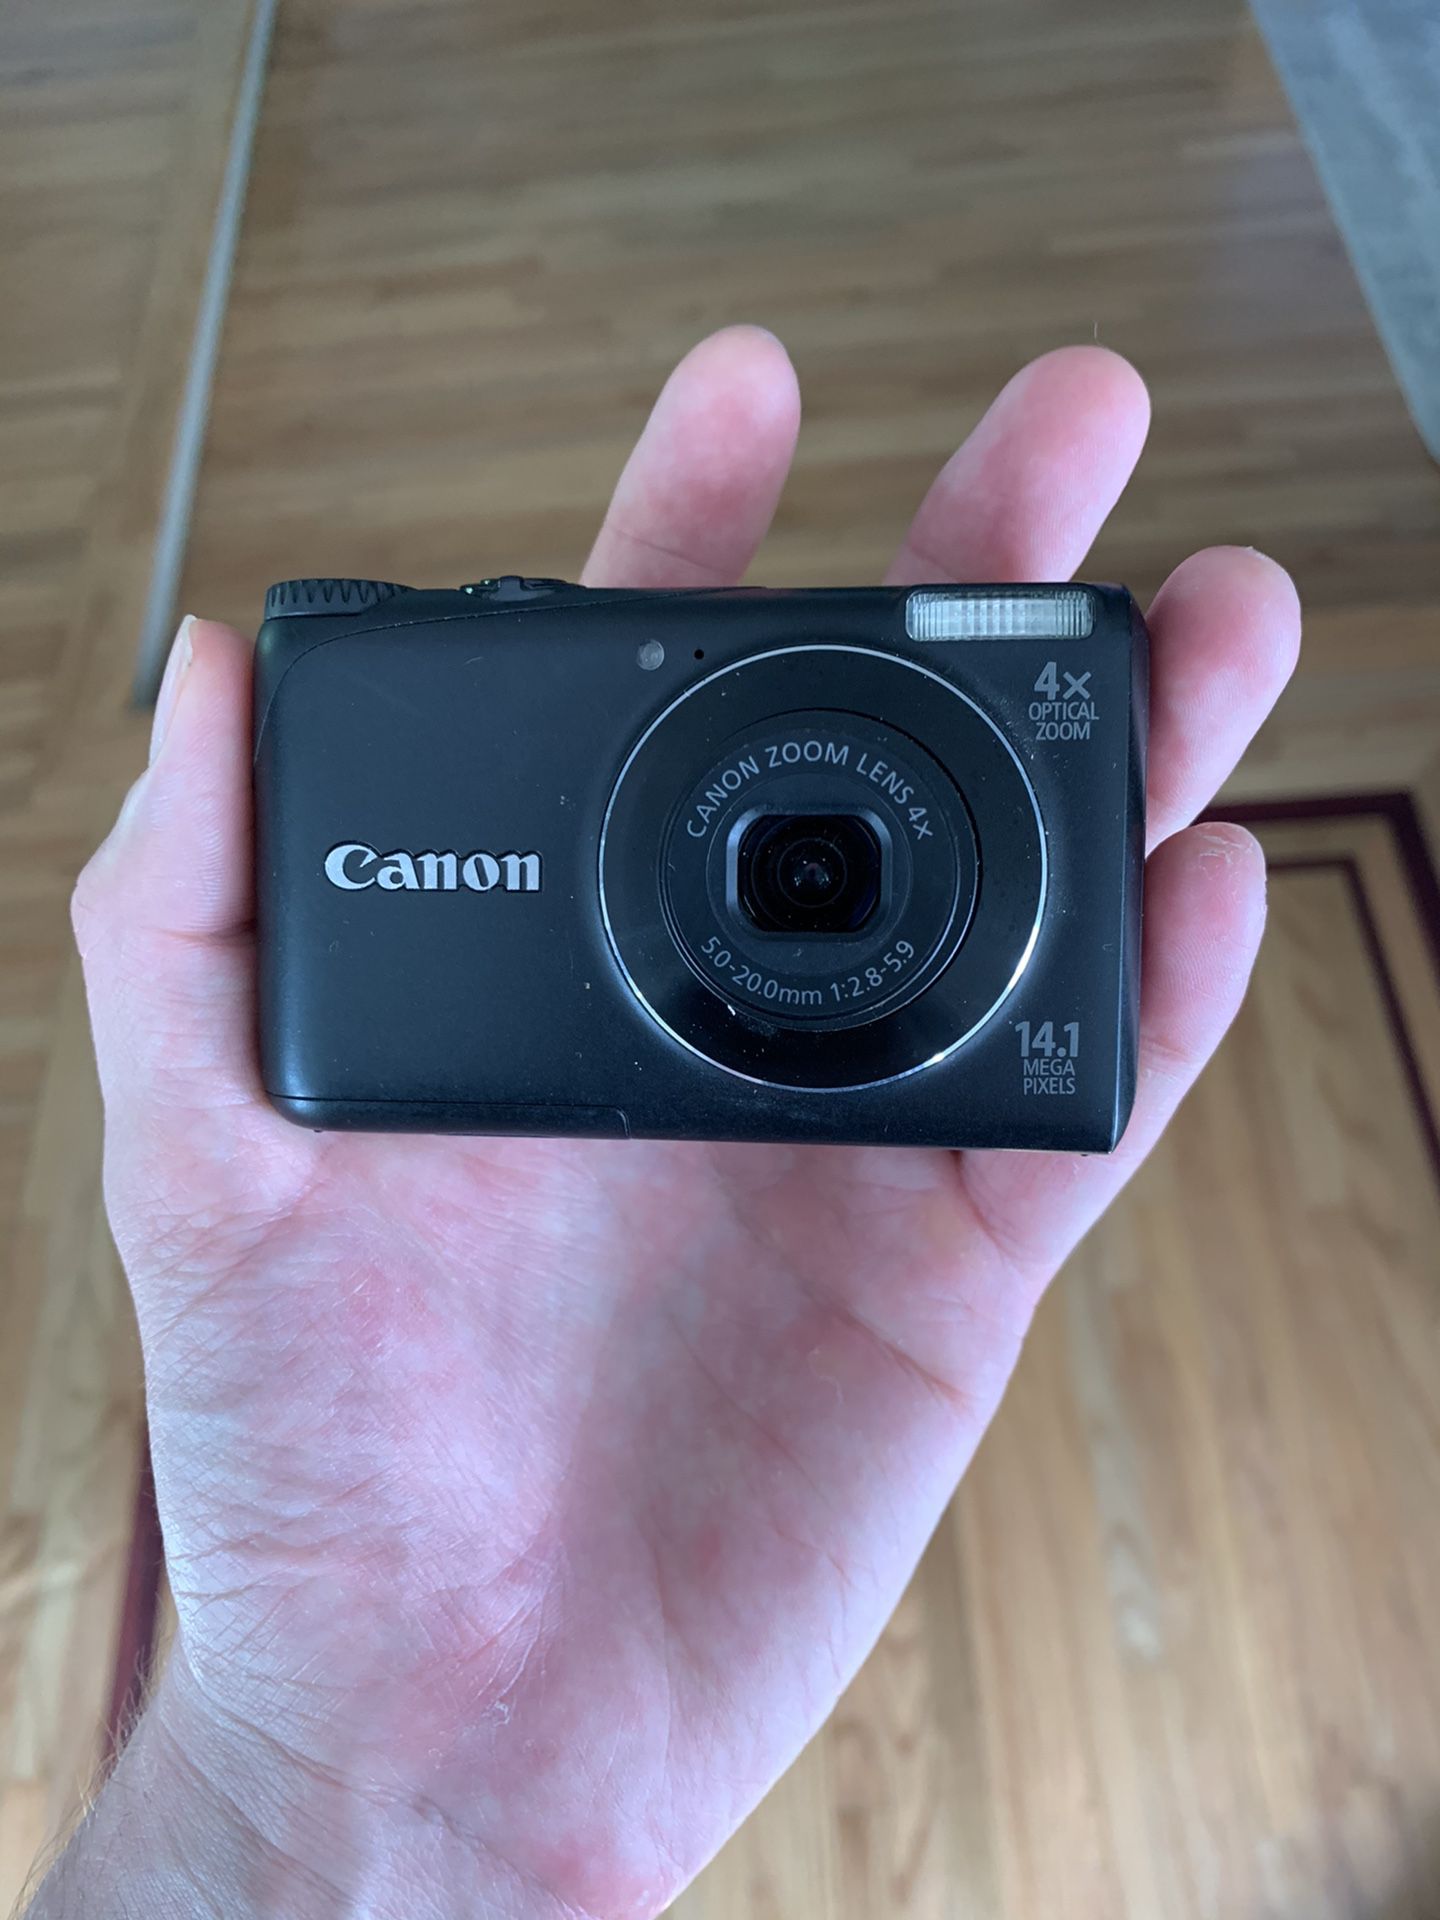 Canon power shot digital camera A2200